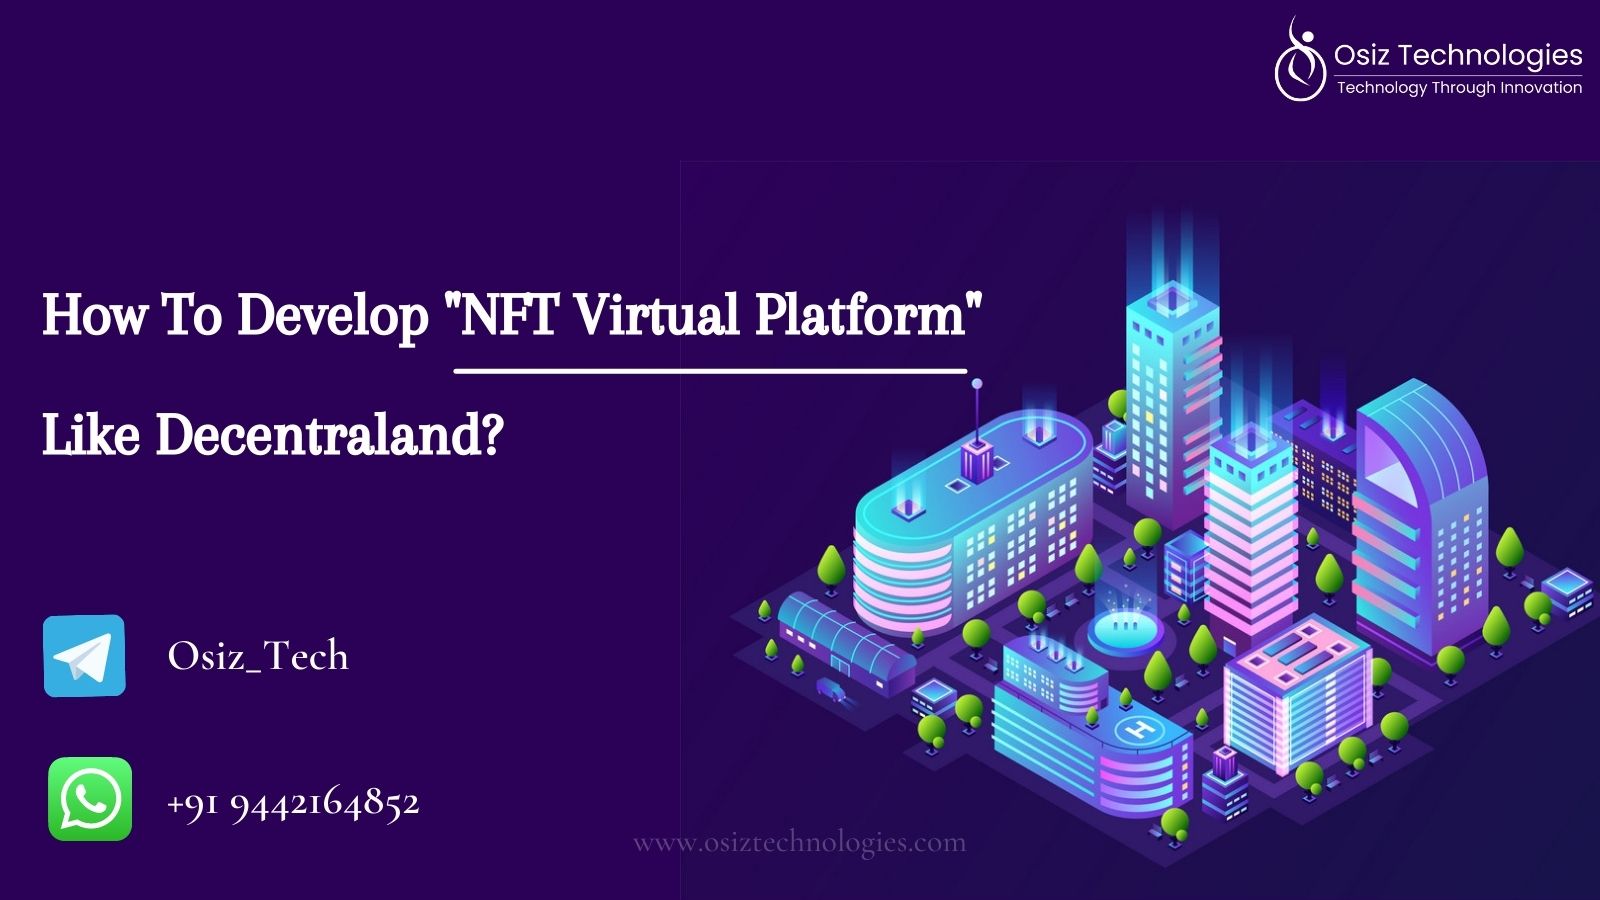 Article about Want To Prosper A "NFT Virtual Platform" Like Decentraland